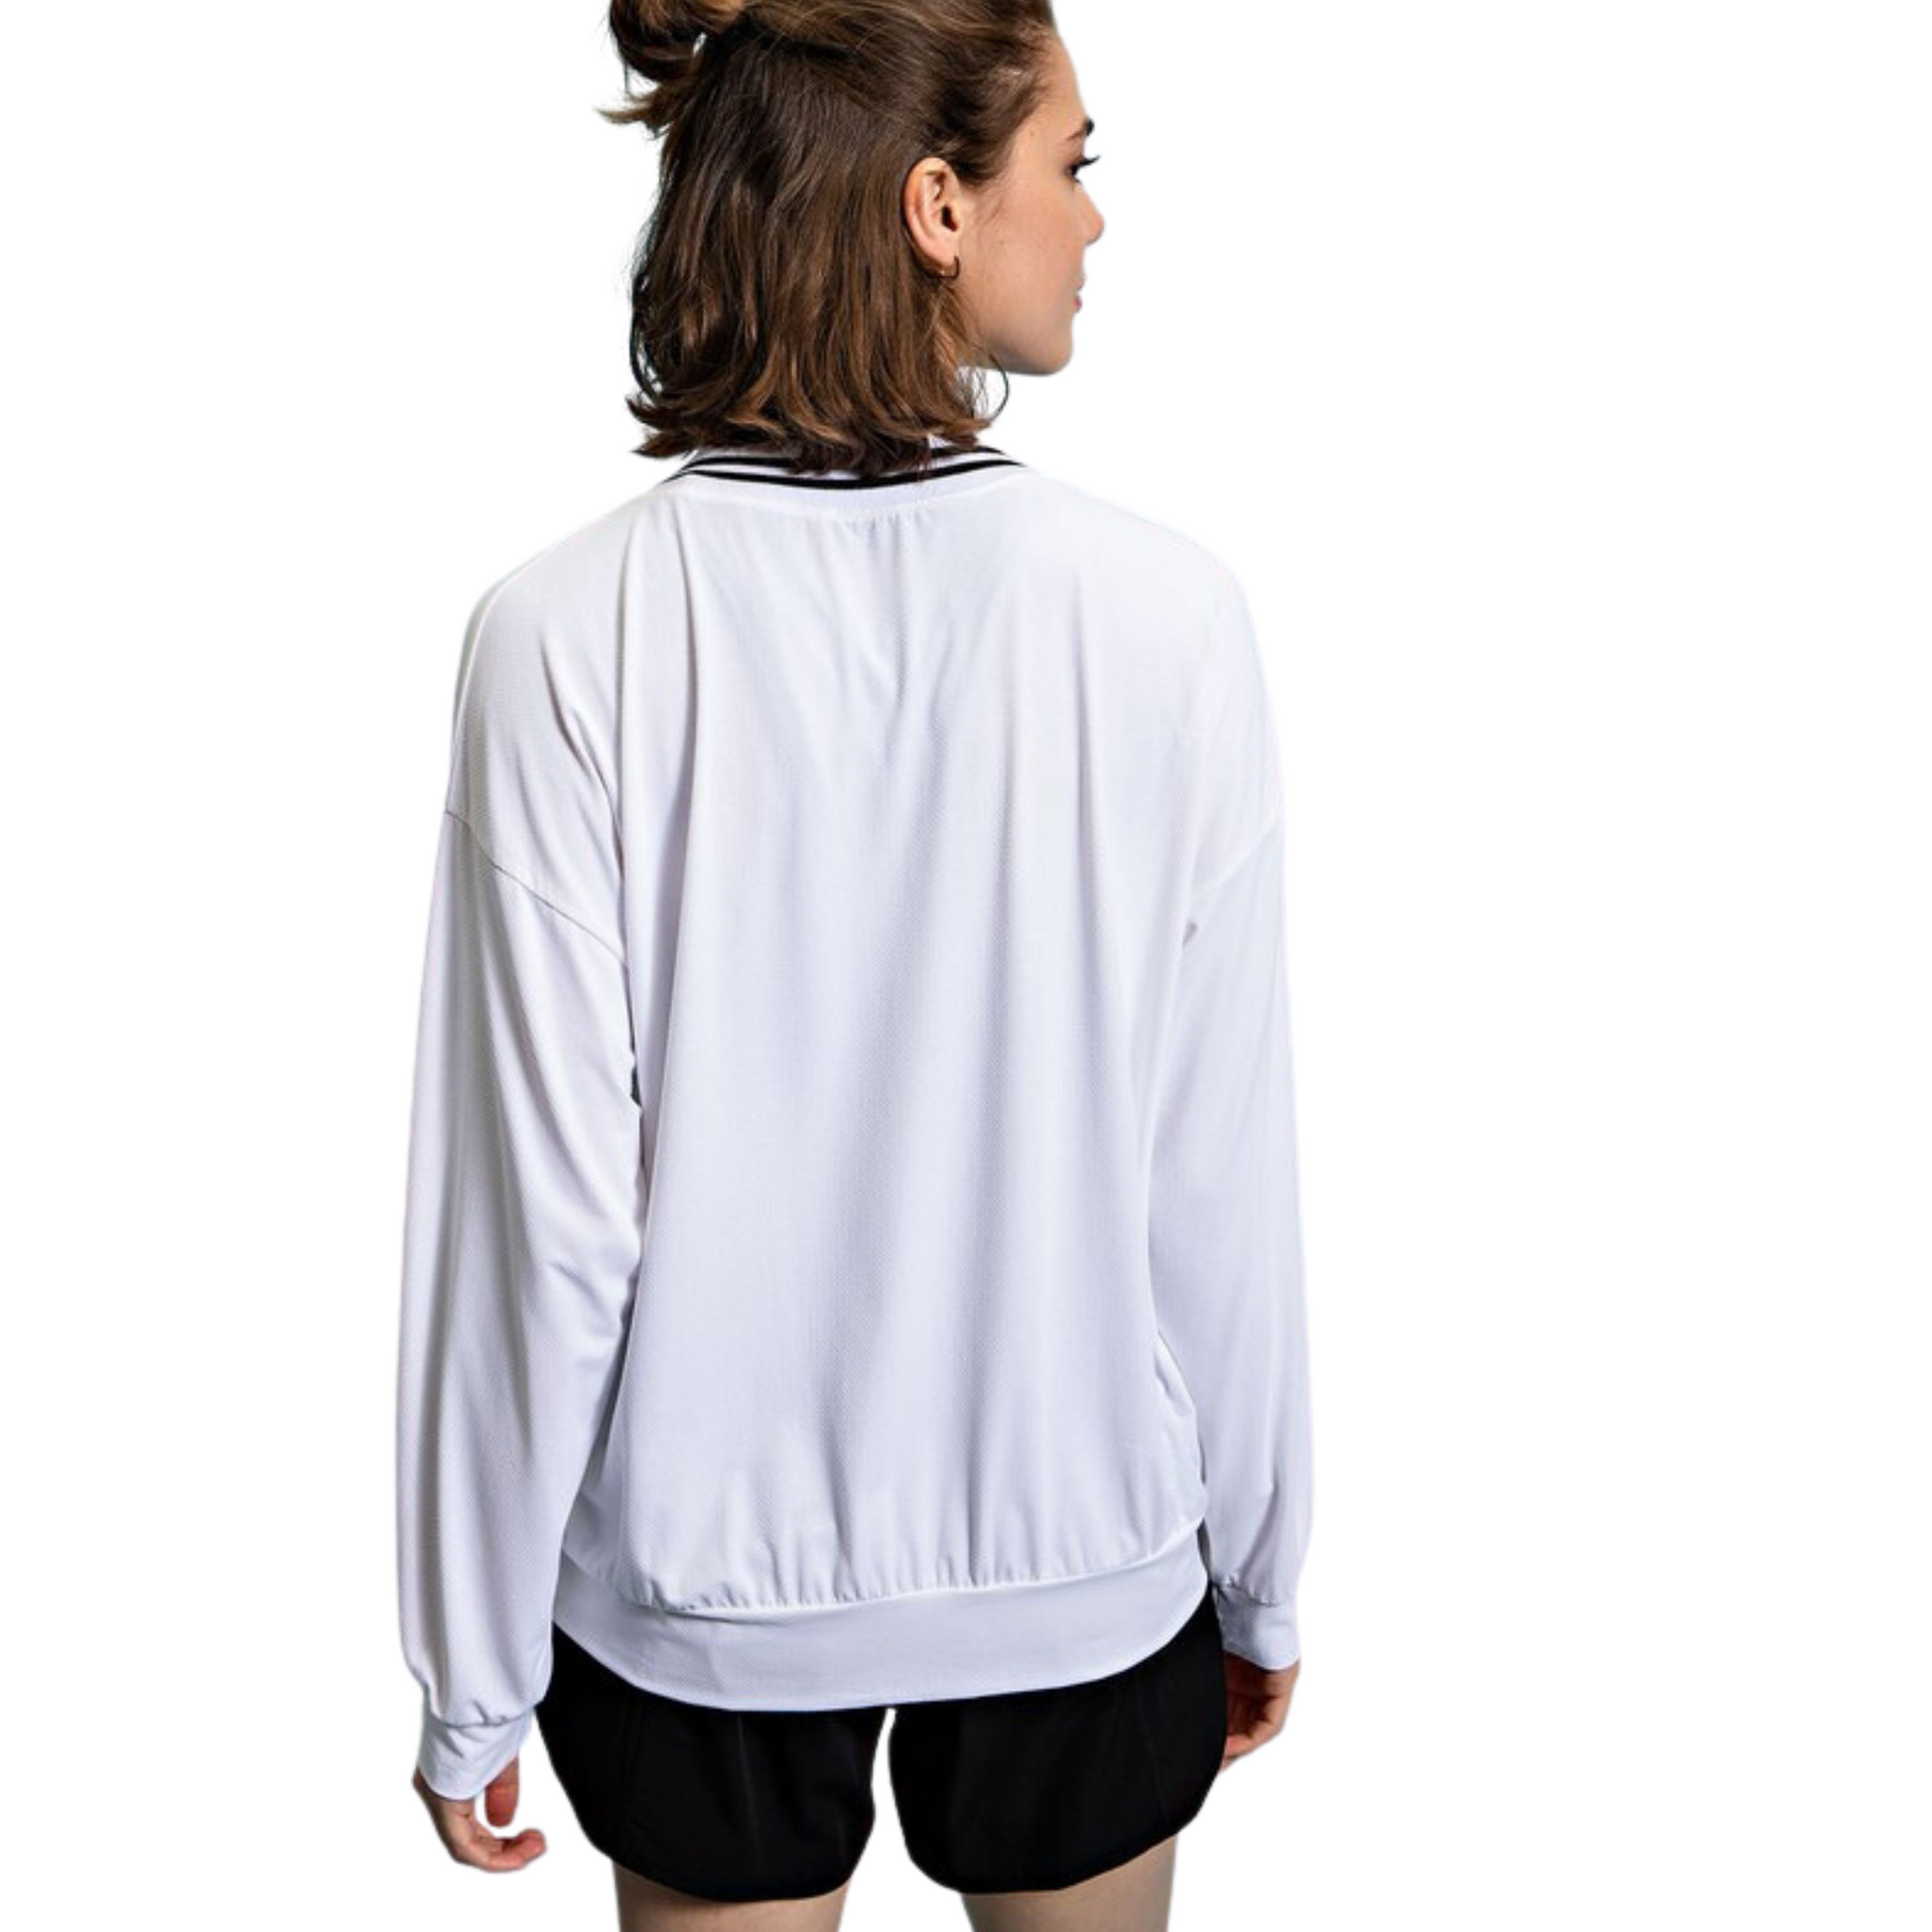 Plus size v-neck long sleeved sweatshirt in off white